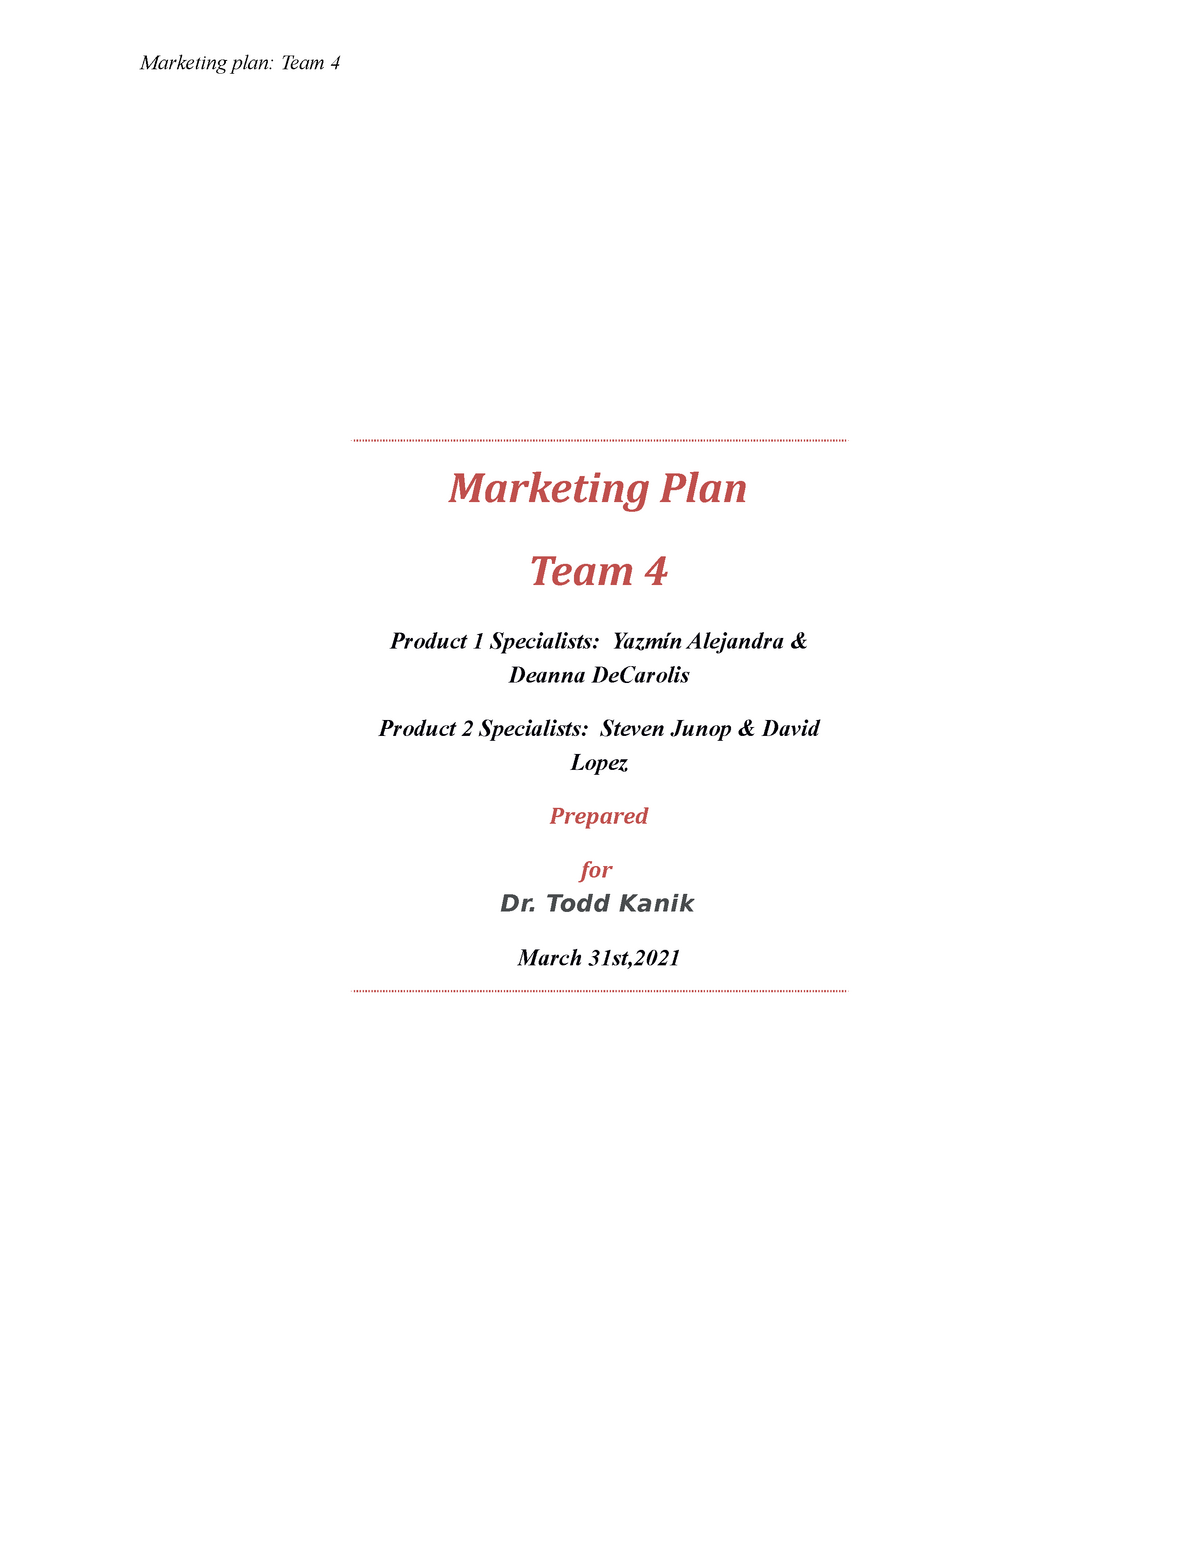 Marketing Plan Final - Marketing Plan Team 4 Product 1 Specialists ...